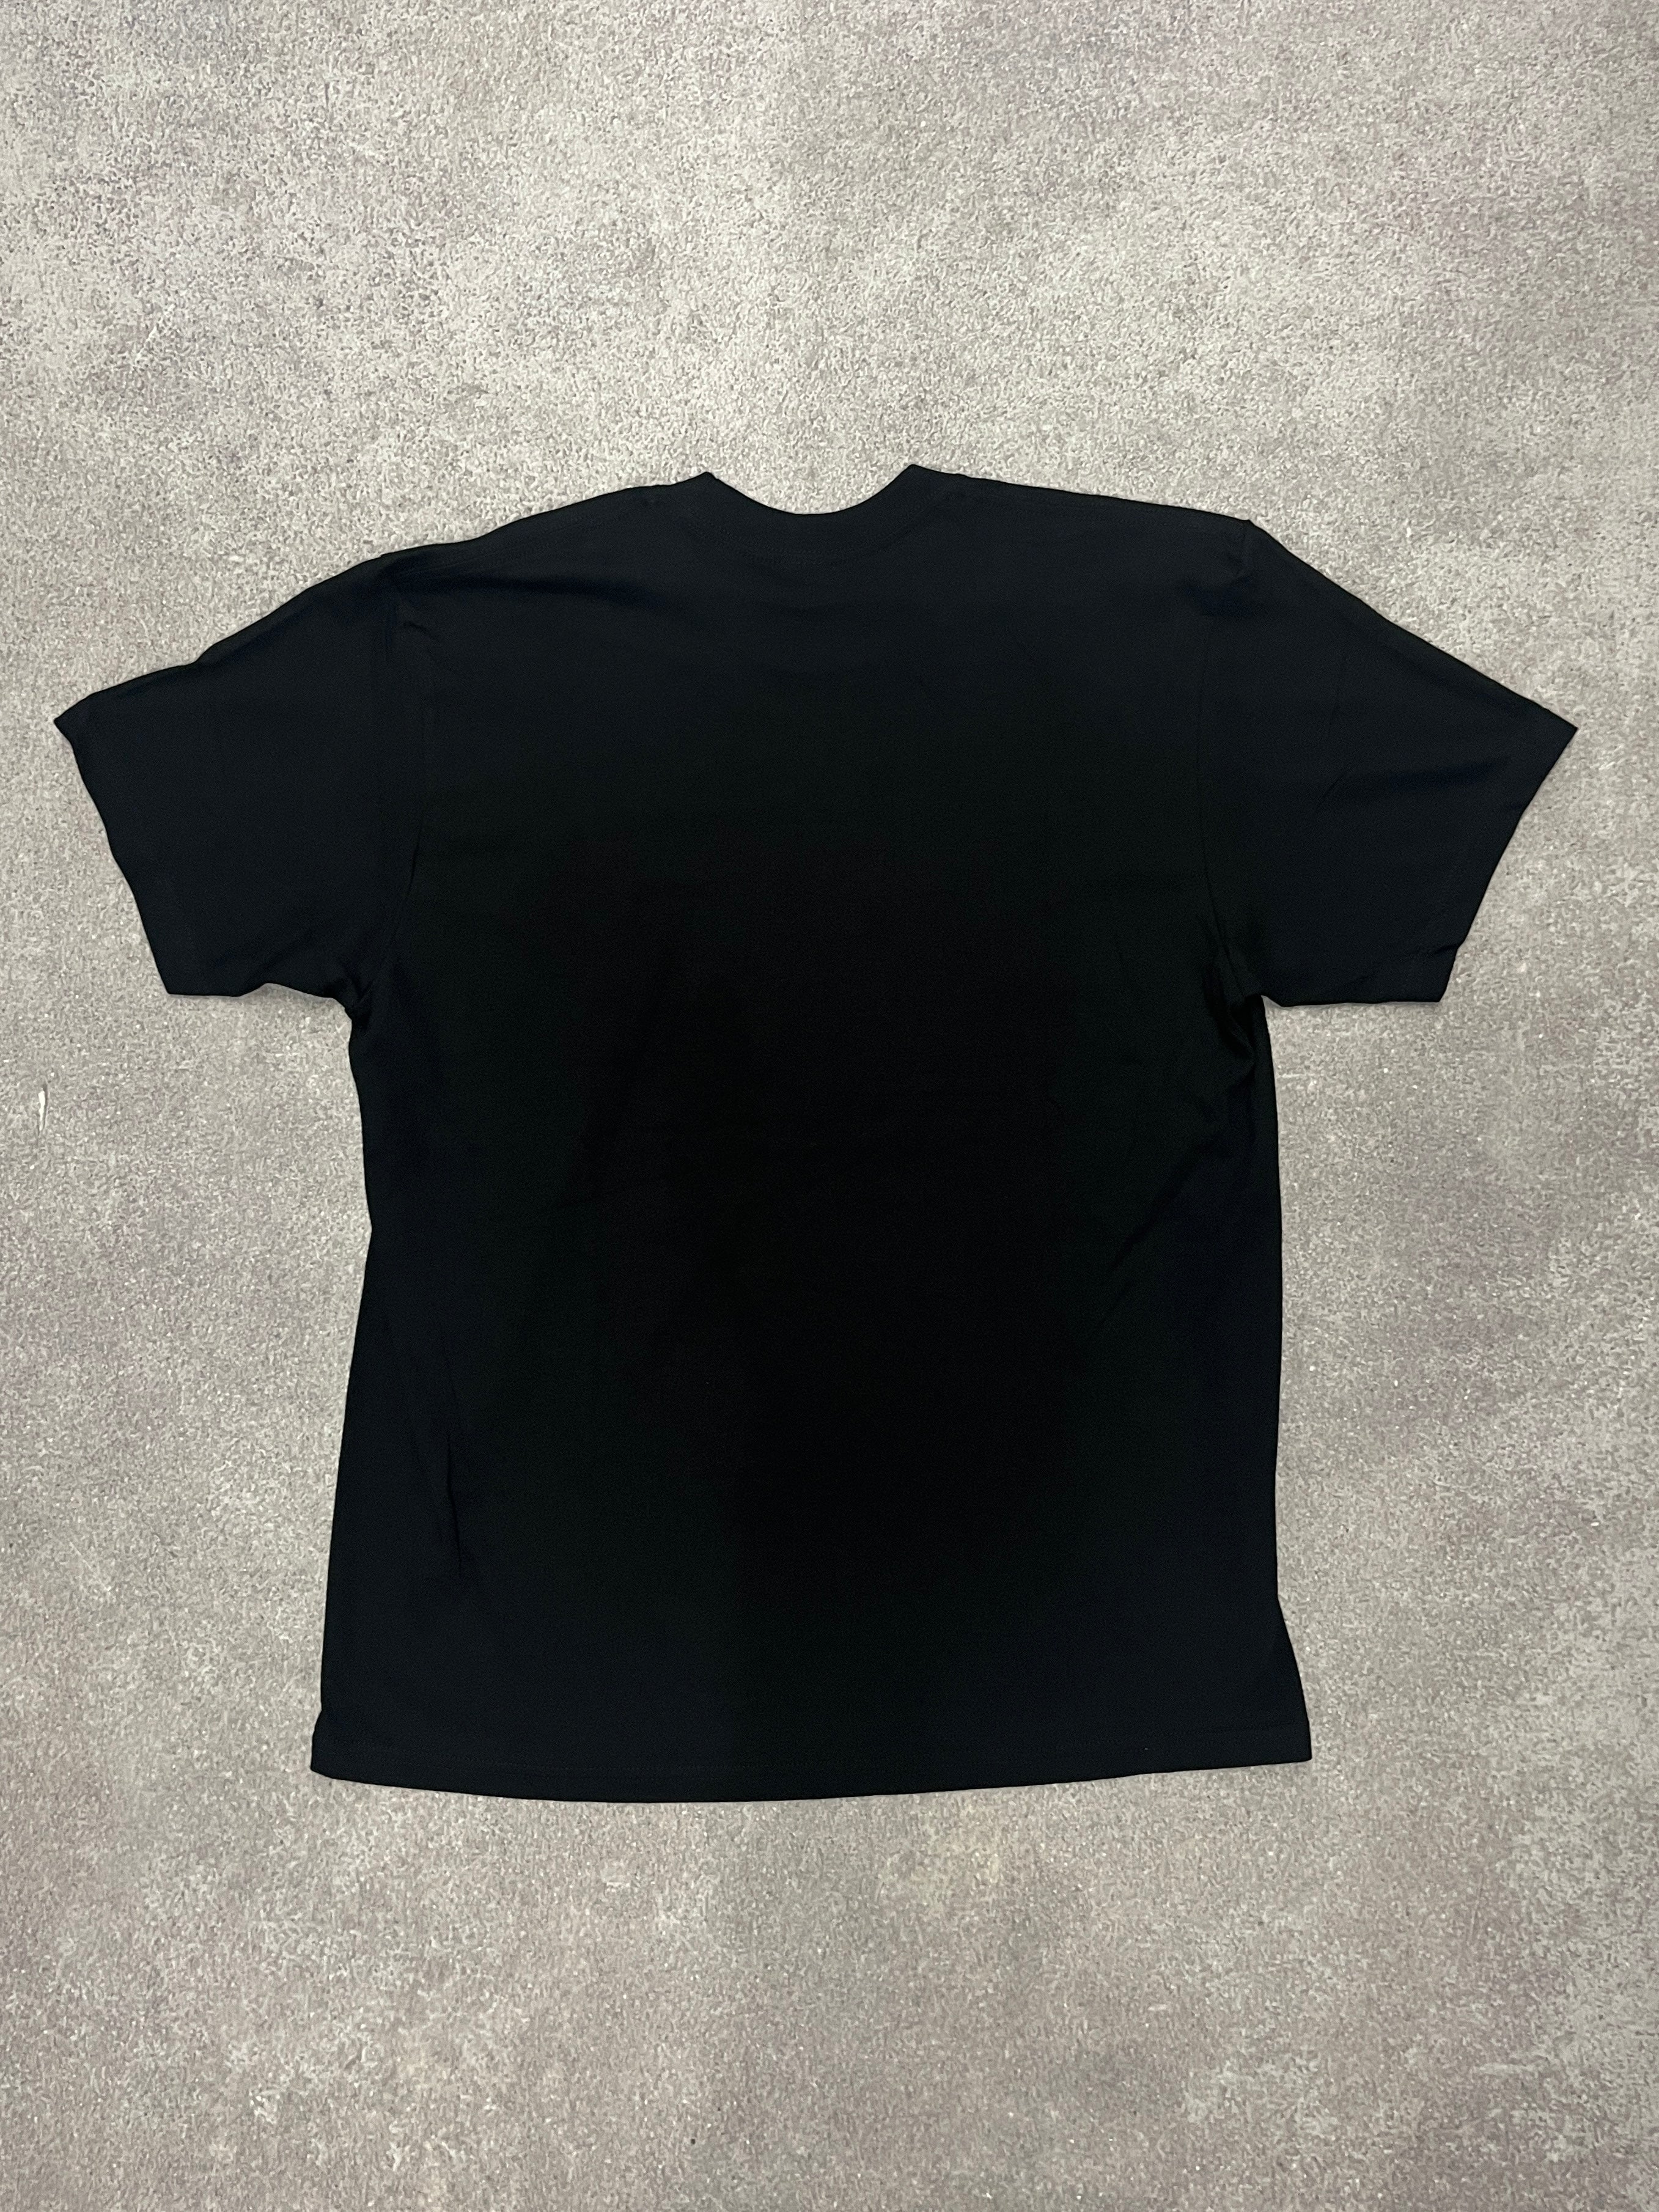 Supreme Banner TShirt Black // Medium - RHAGHOUSE VINTAGE